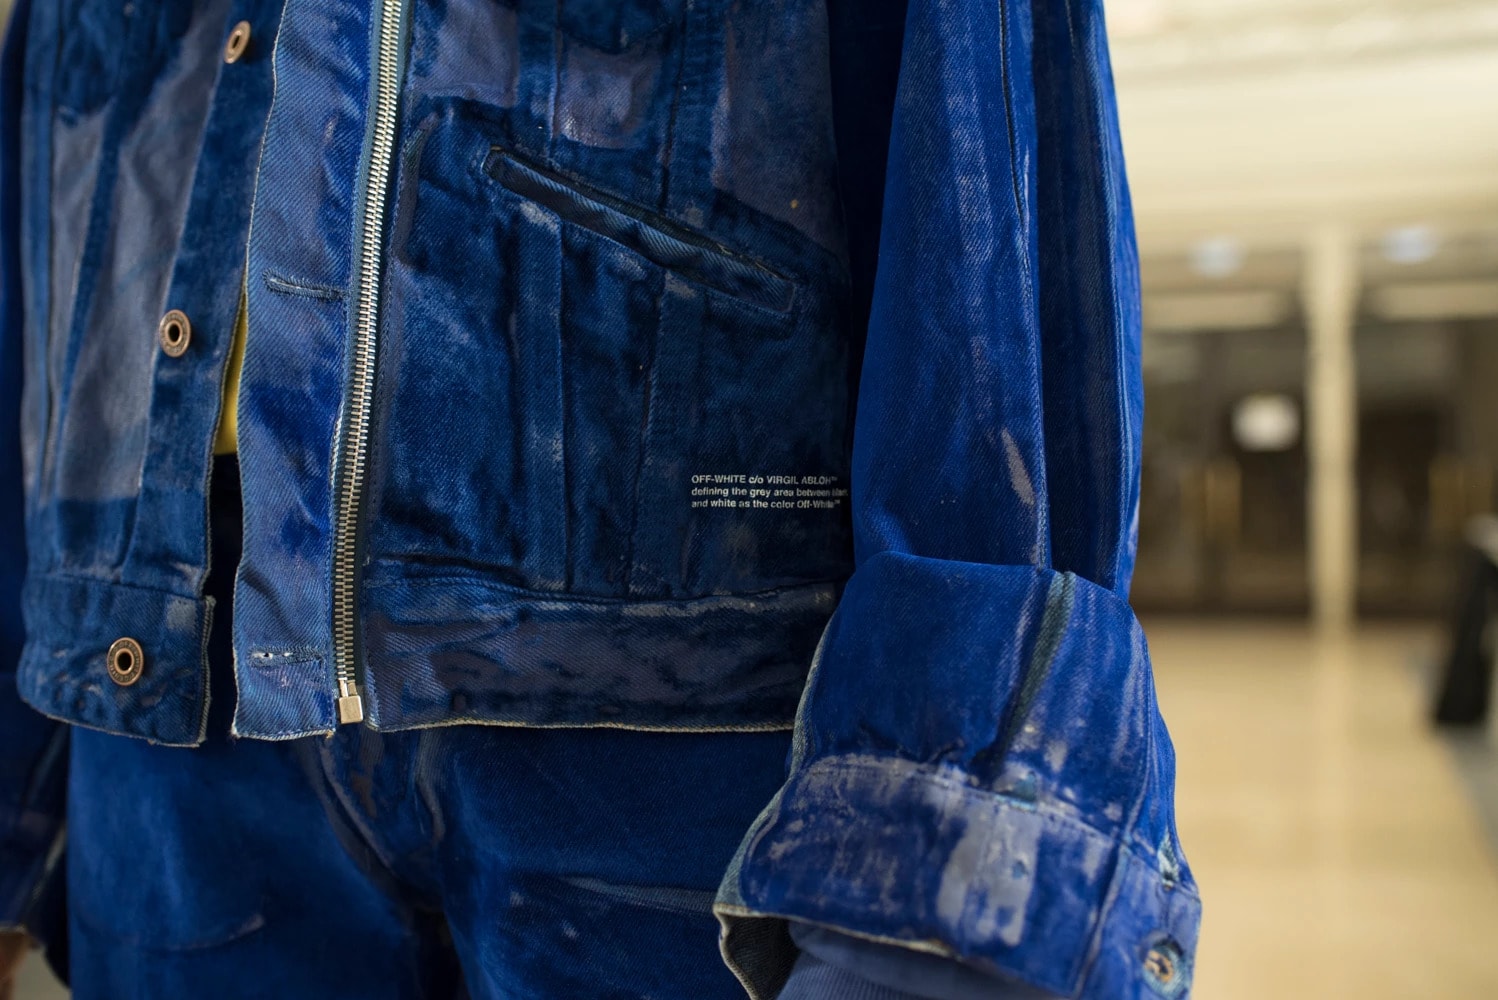 Off-White Virgil Abloh Menswear Spring/Summer 2019 Paris Fashion Week Men's Collection Backstage Jacket Blue